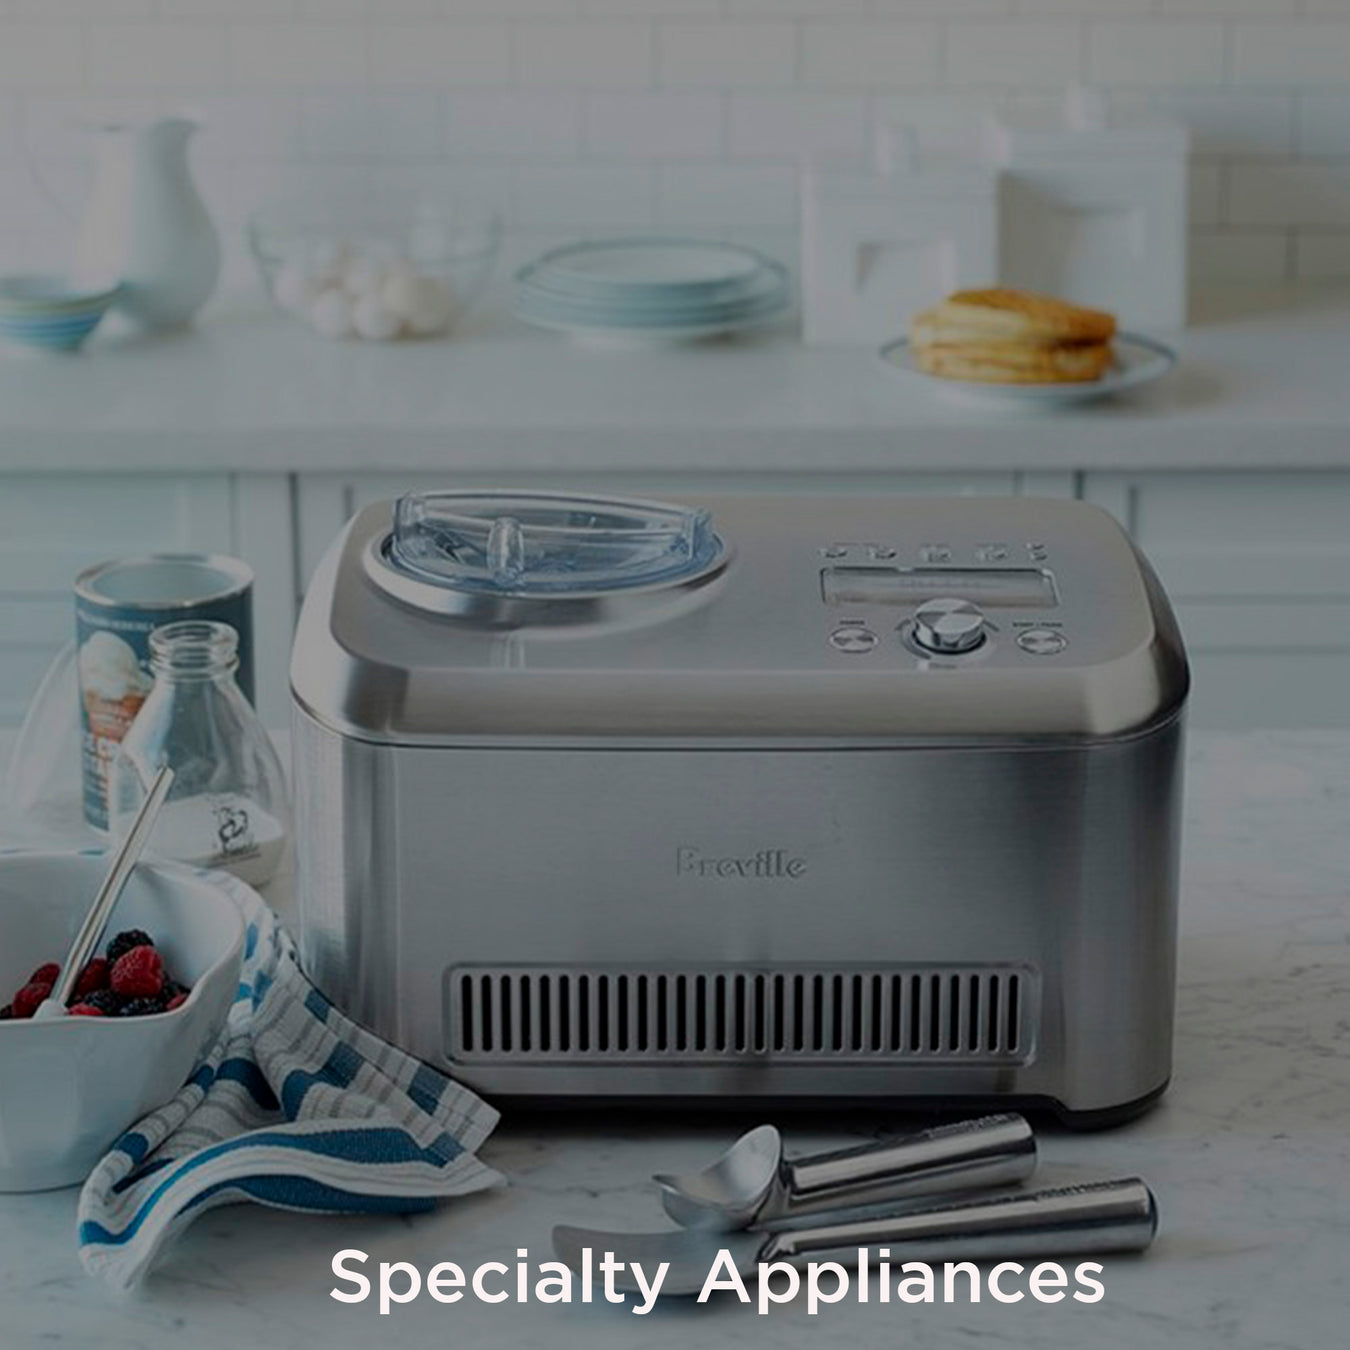 Breville Specialty Appliances